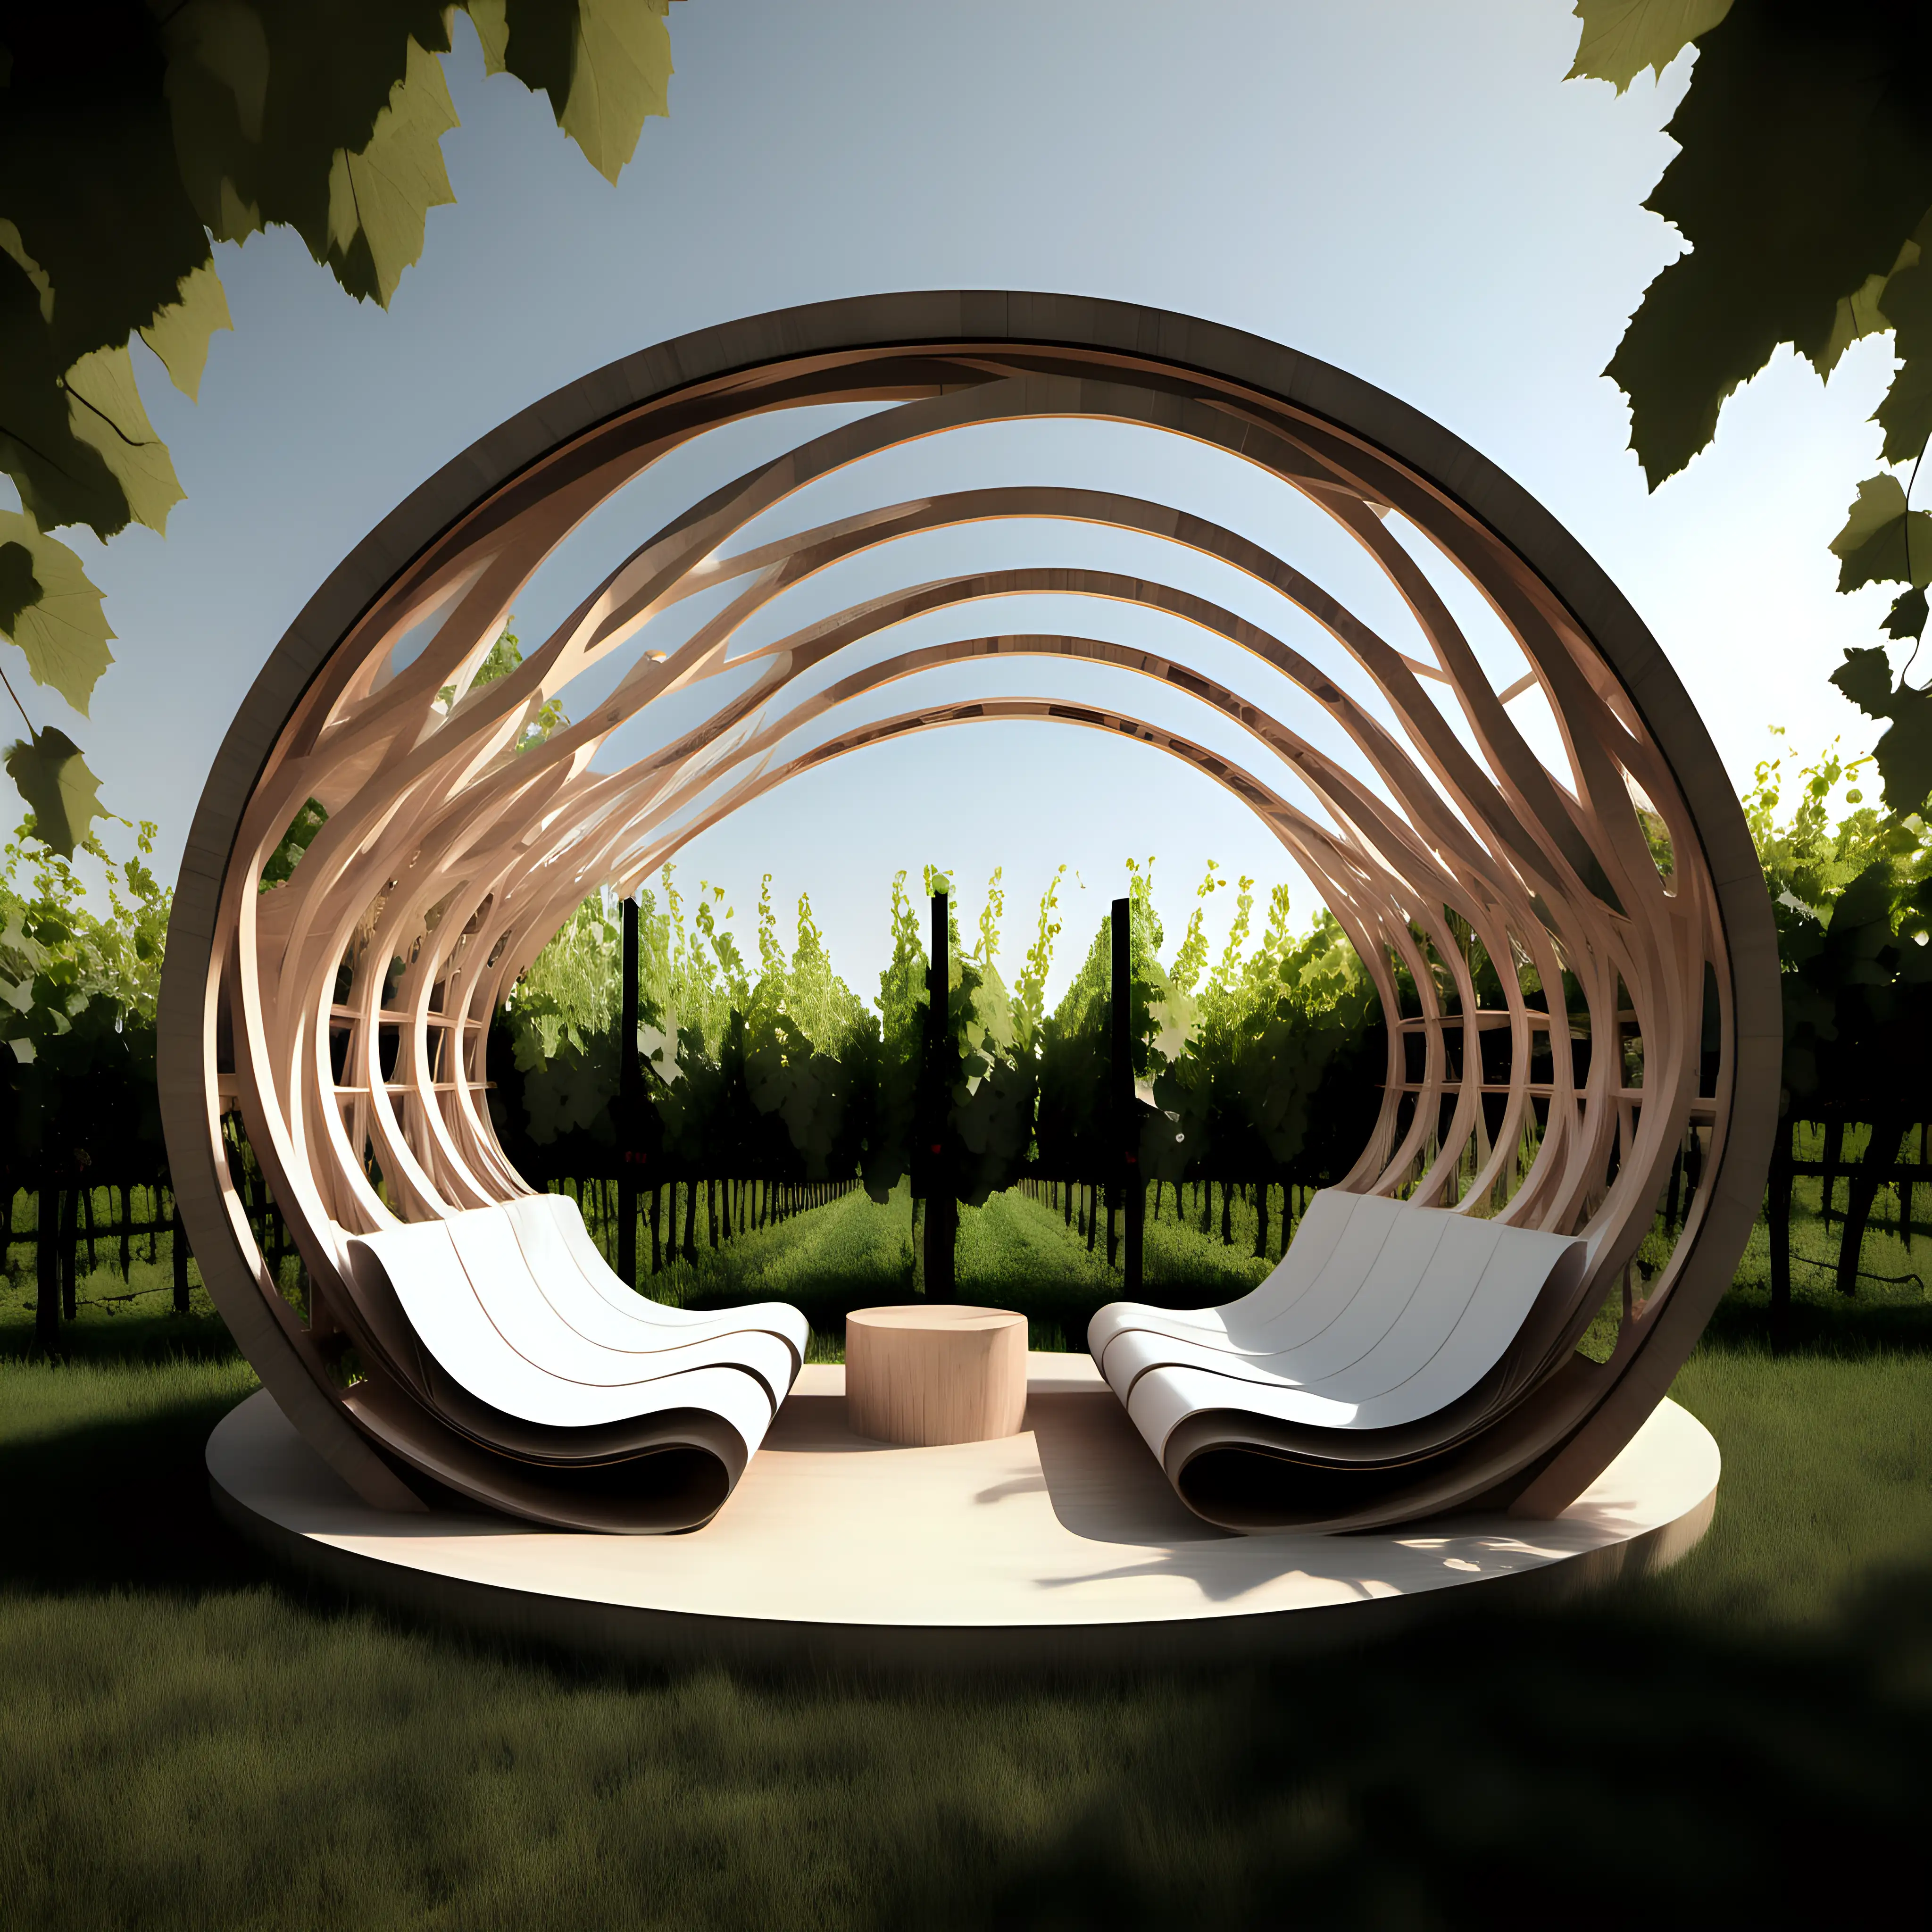 Parametric Circular Pavilion in Vineyard Landscape